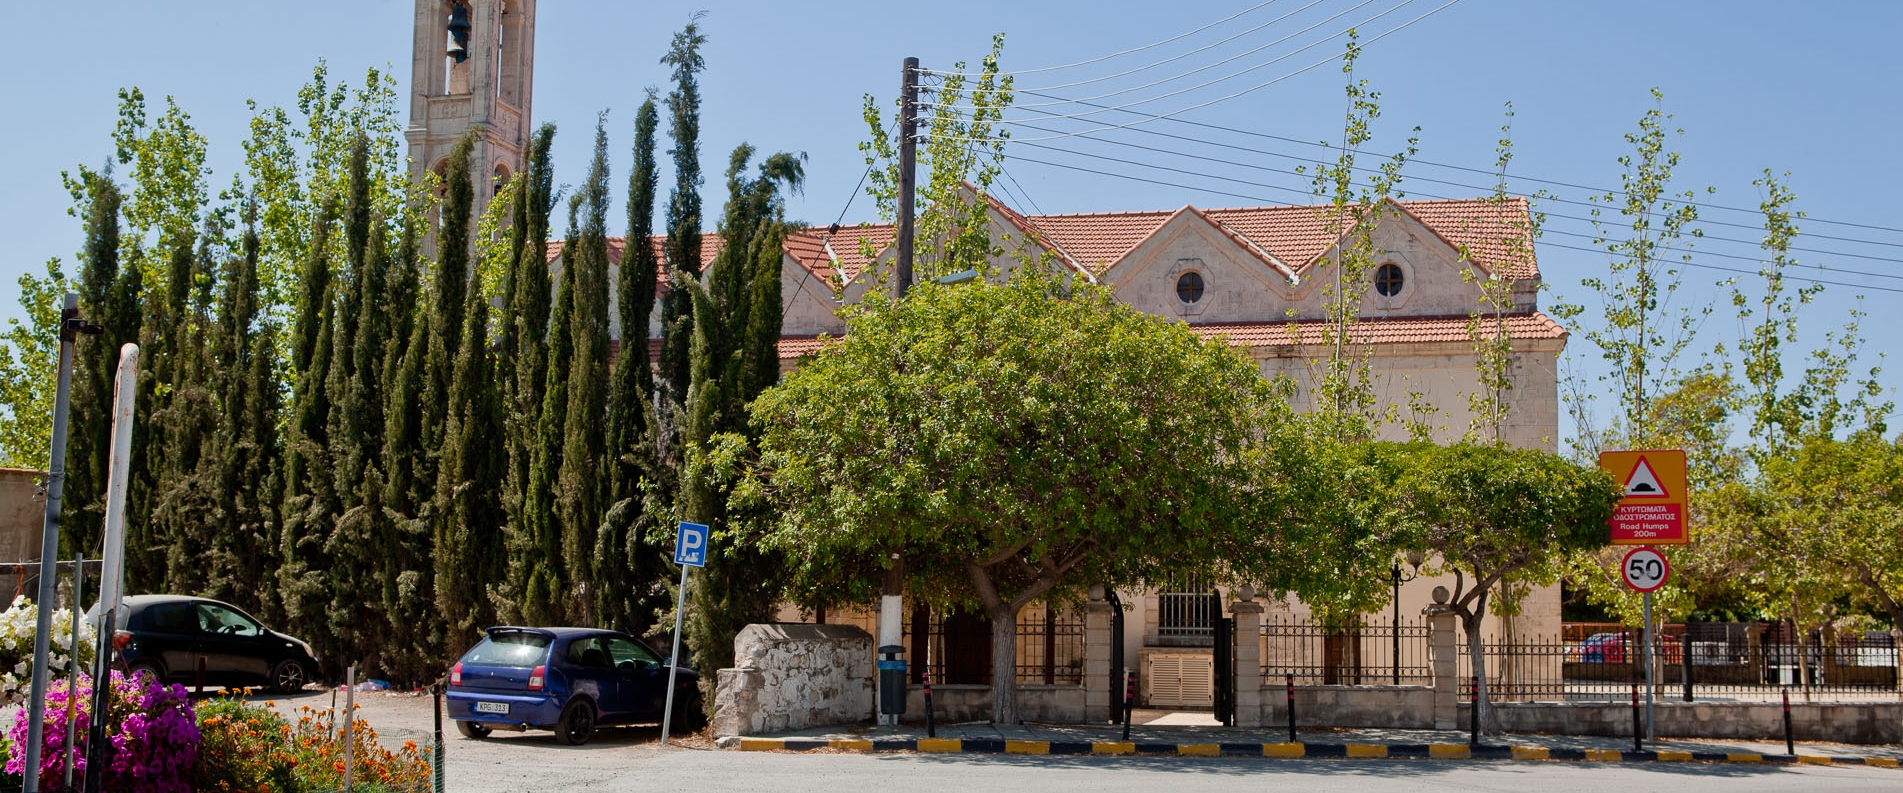 Villages of Limassol: Pyrgos, Pentakomo, Monagroulli